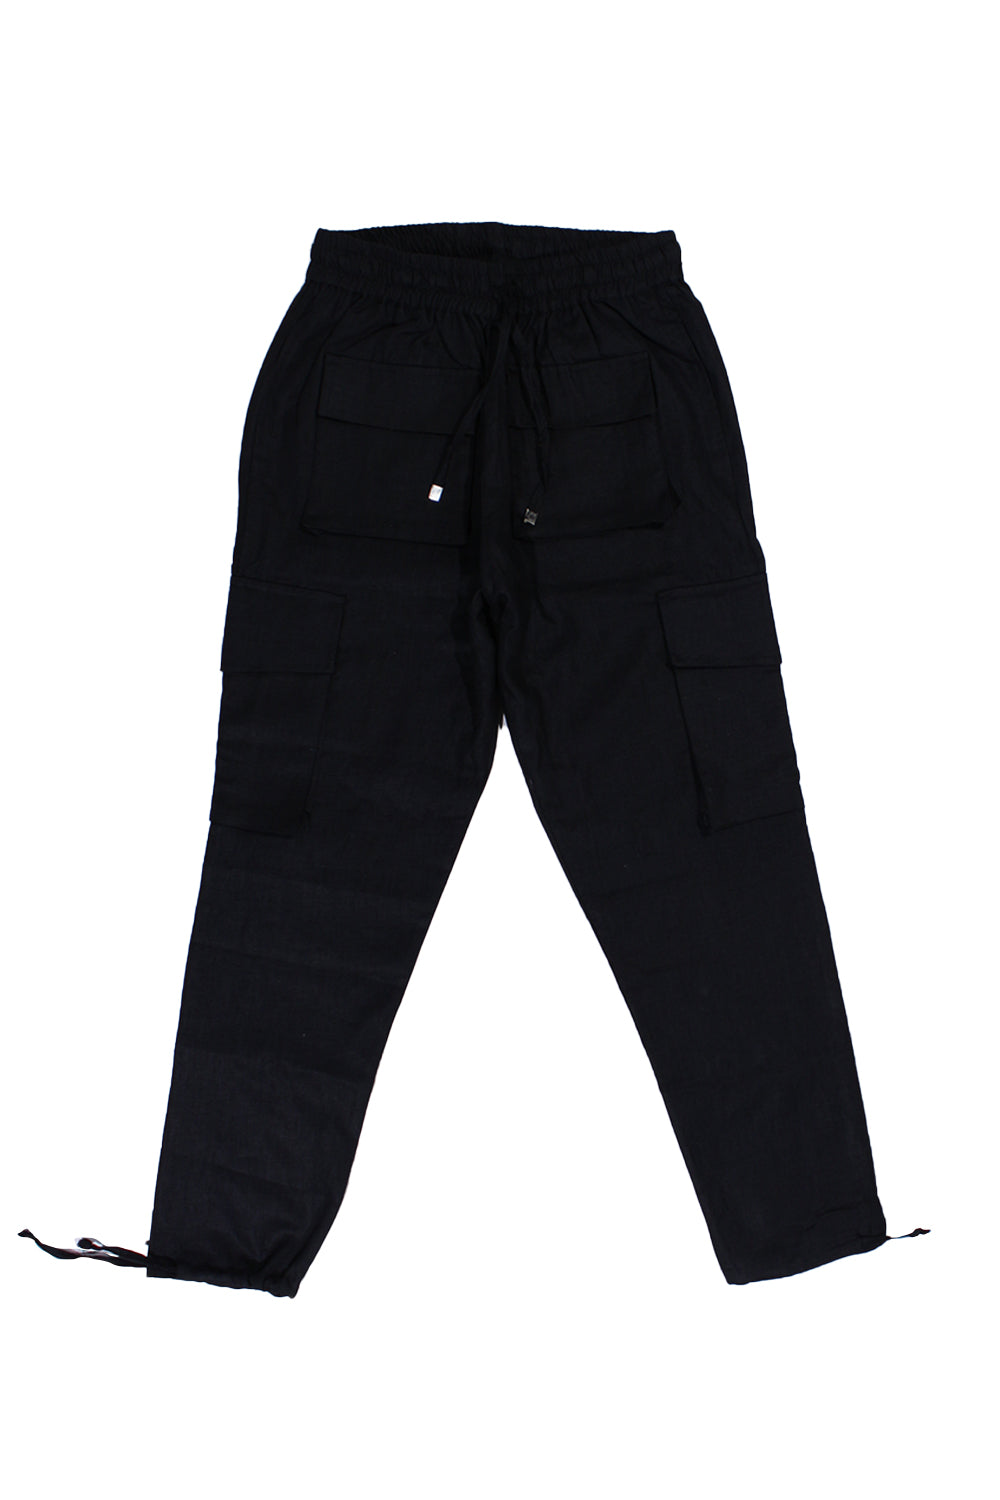 CREW Long Linen Cargo 4 Pockets Pants Black